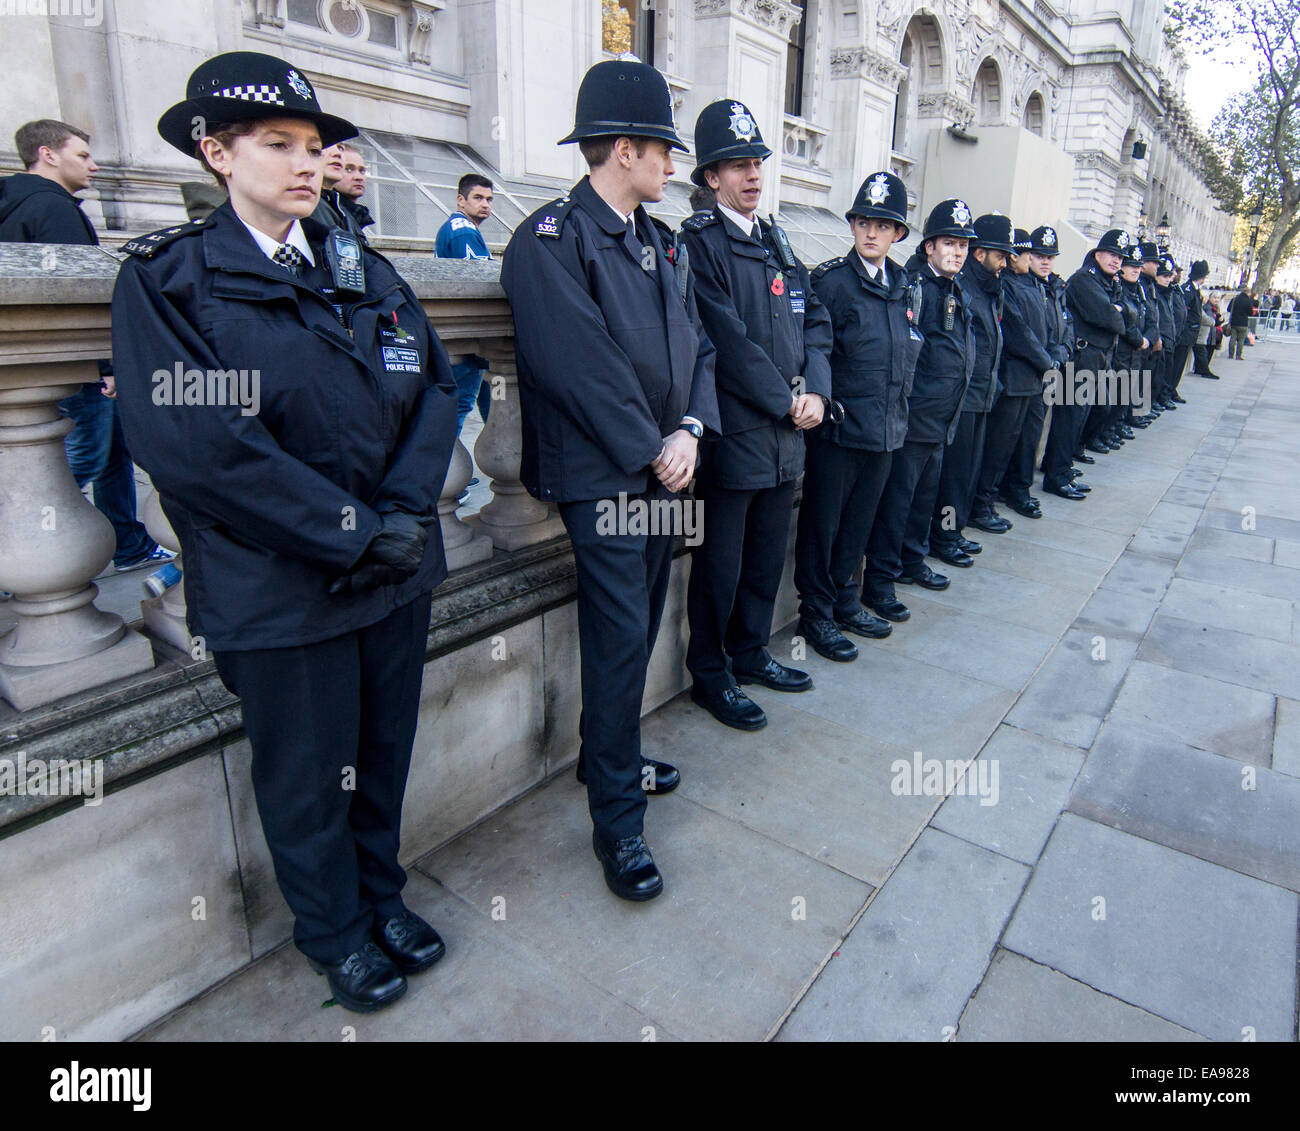 London police on duty Stock Photo